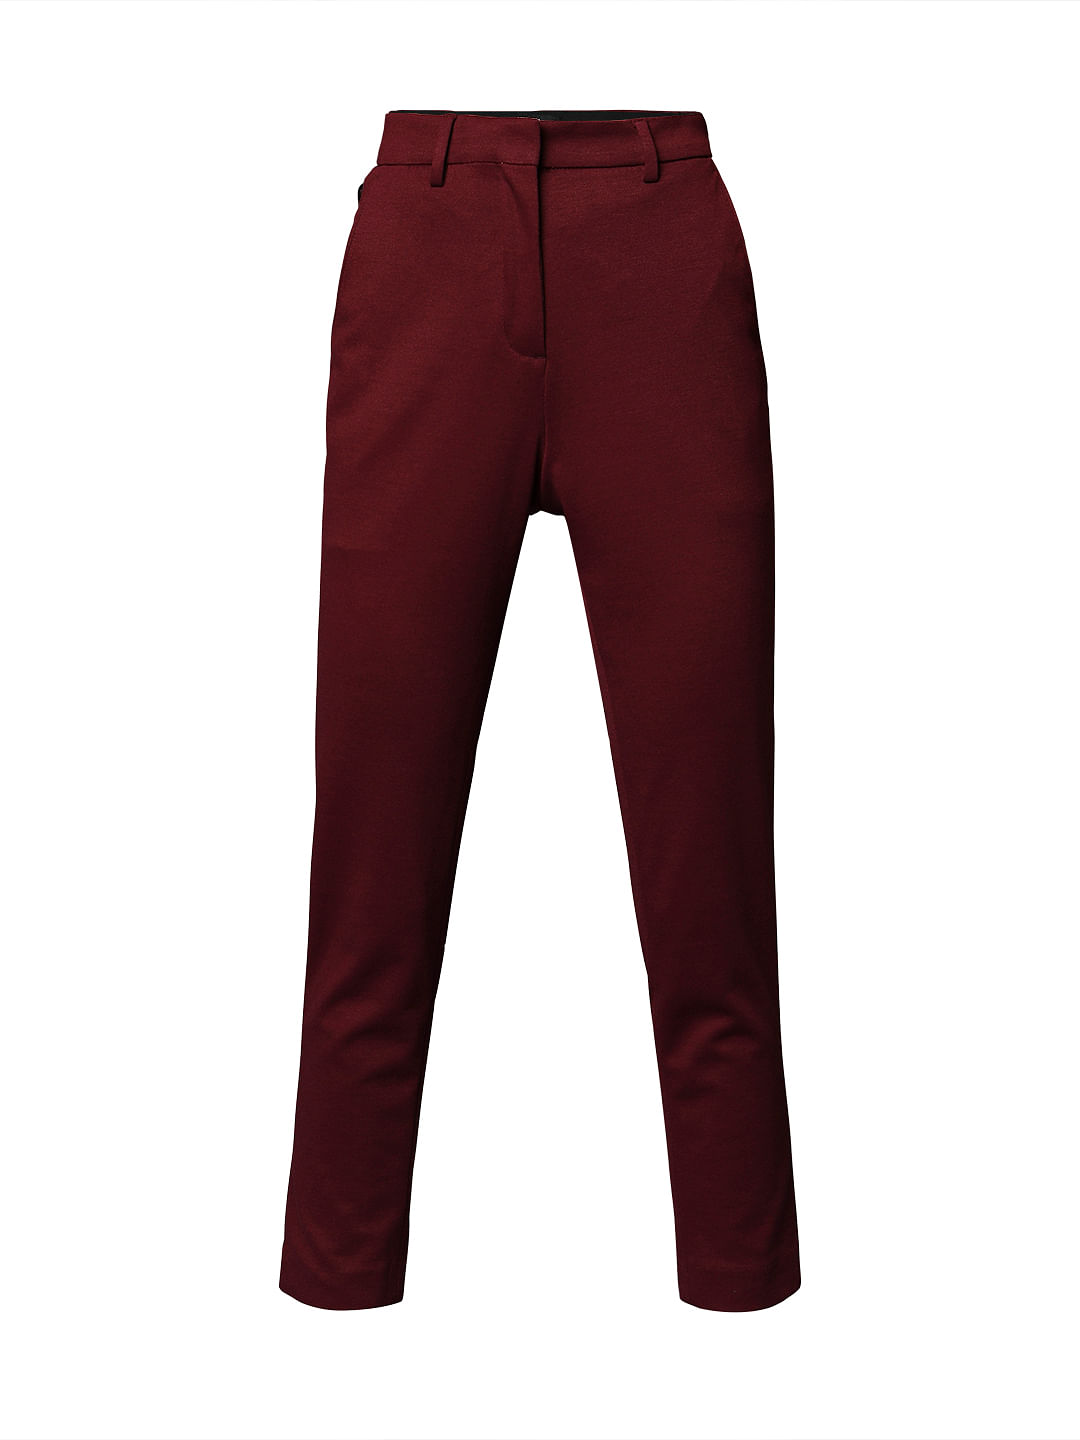 Slim Fit Burgundy Stretch Suit Pant | RW&CO.